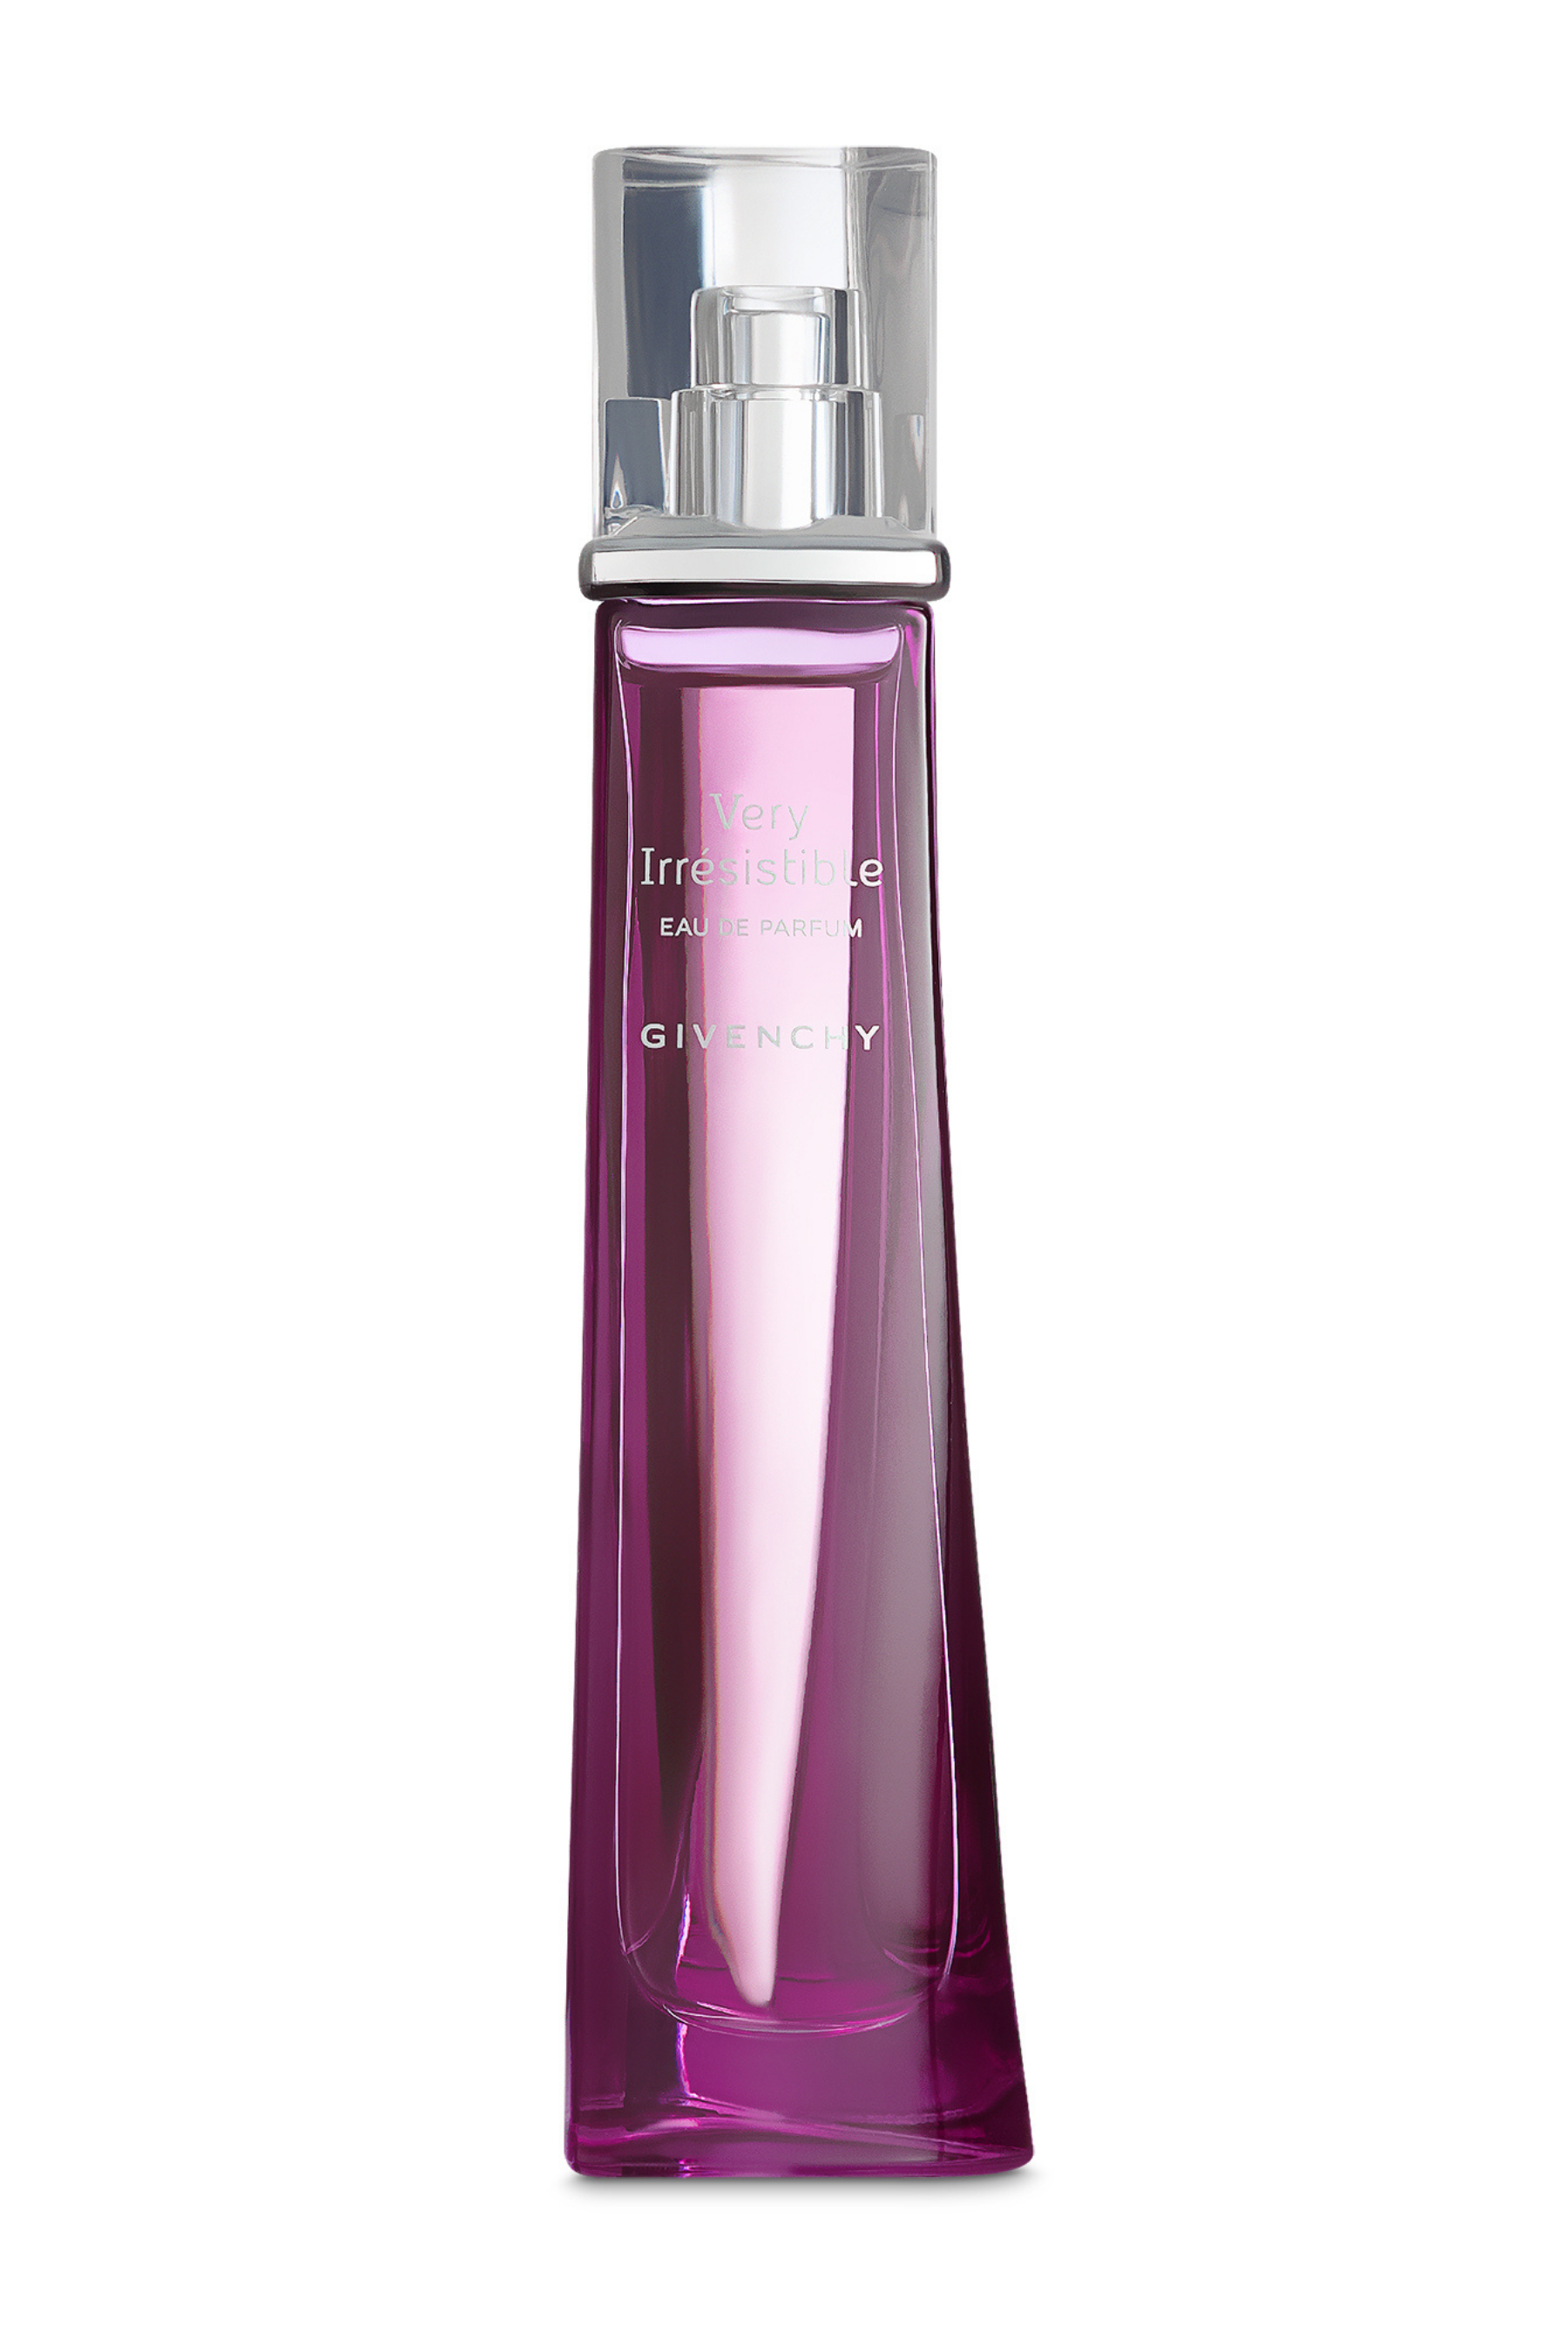 Givenchy | Very Irresistible Eau de Parfum - REBL